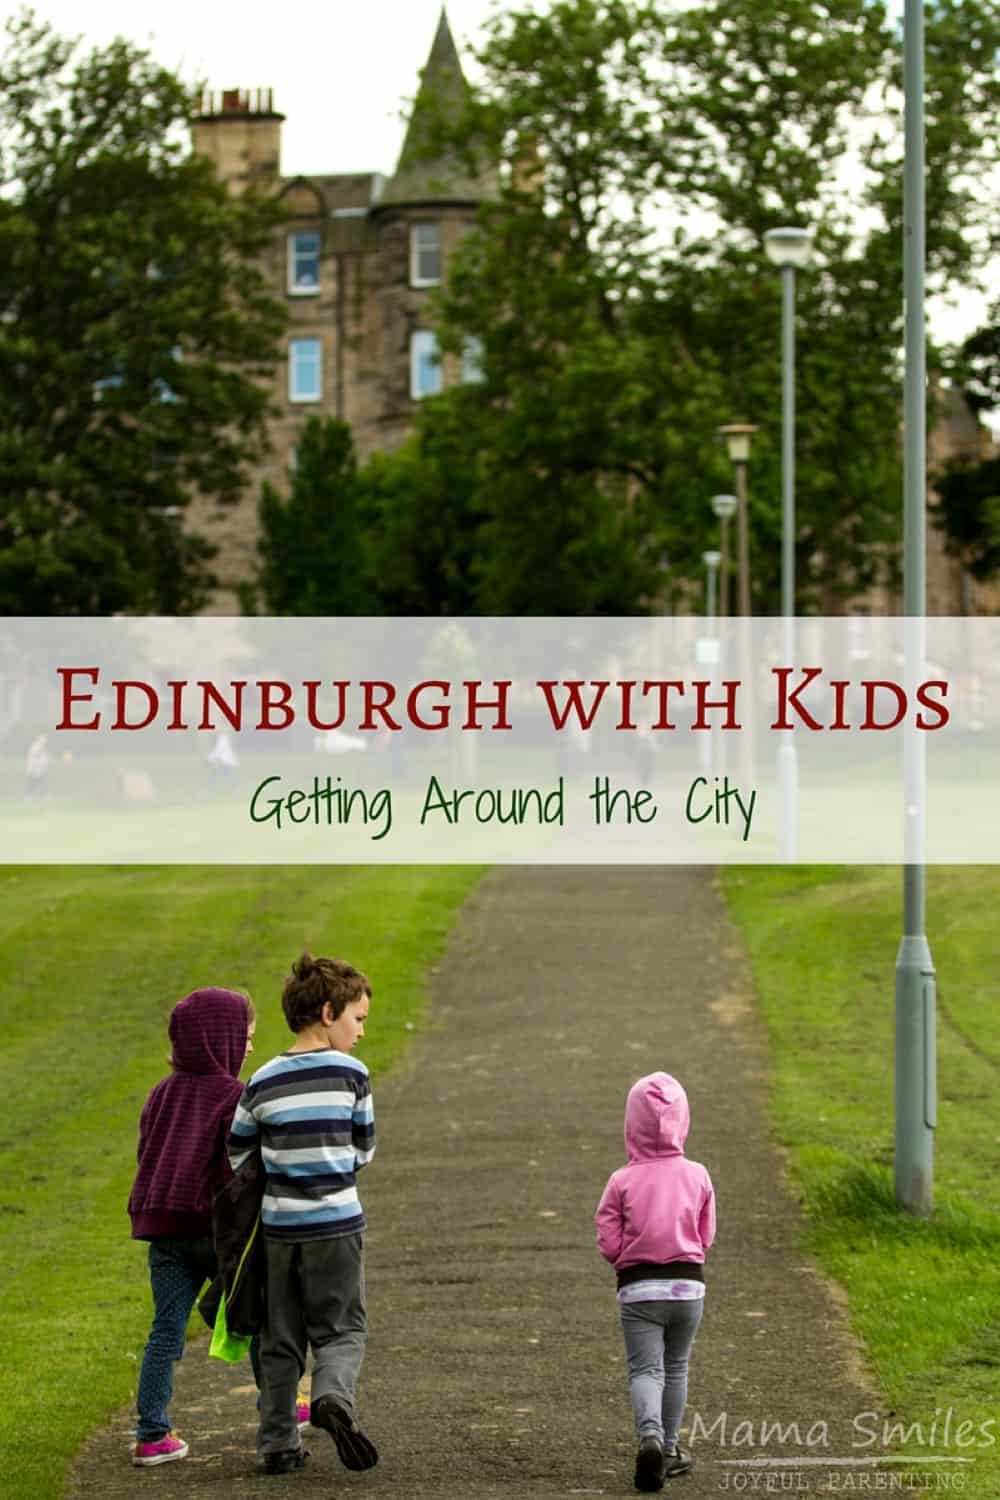 Useful tips for getting around Edinburgh with kids